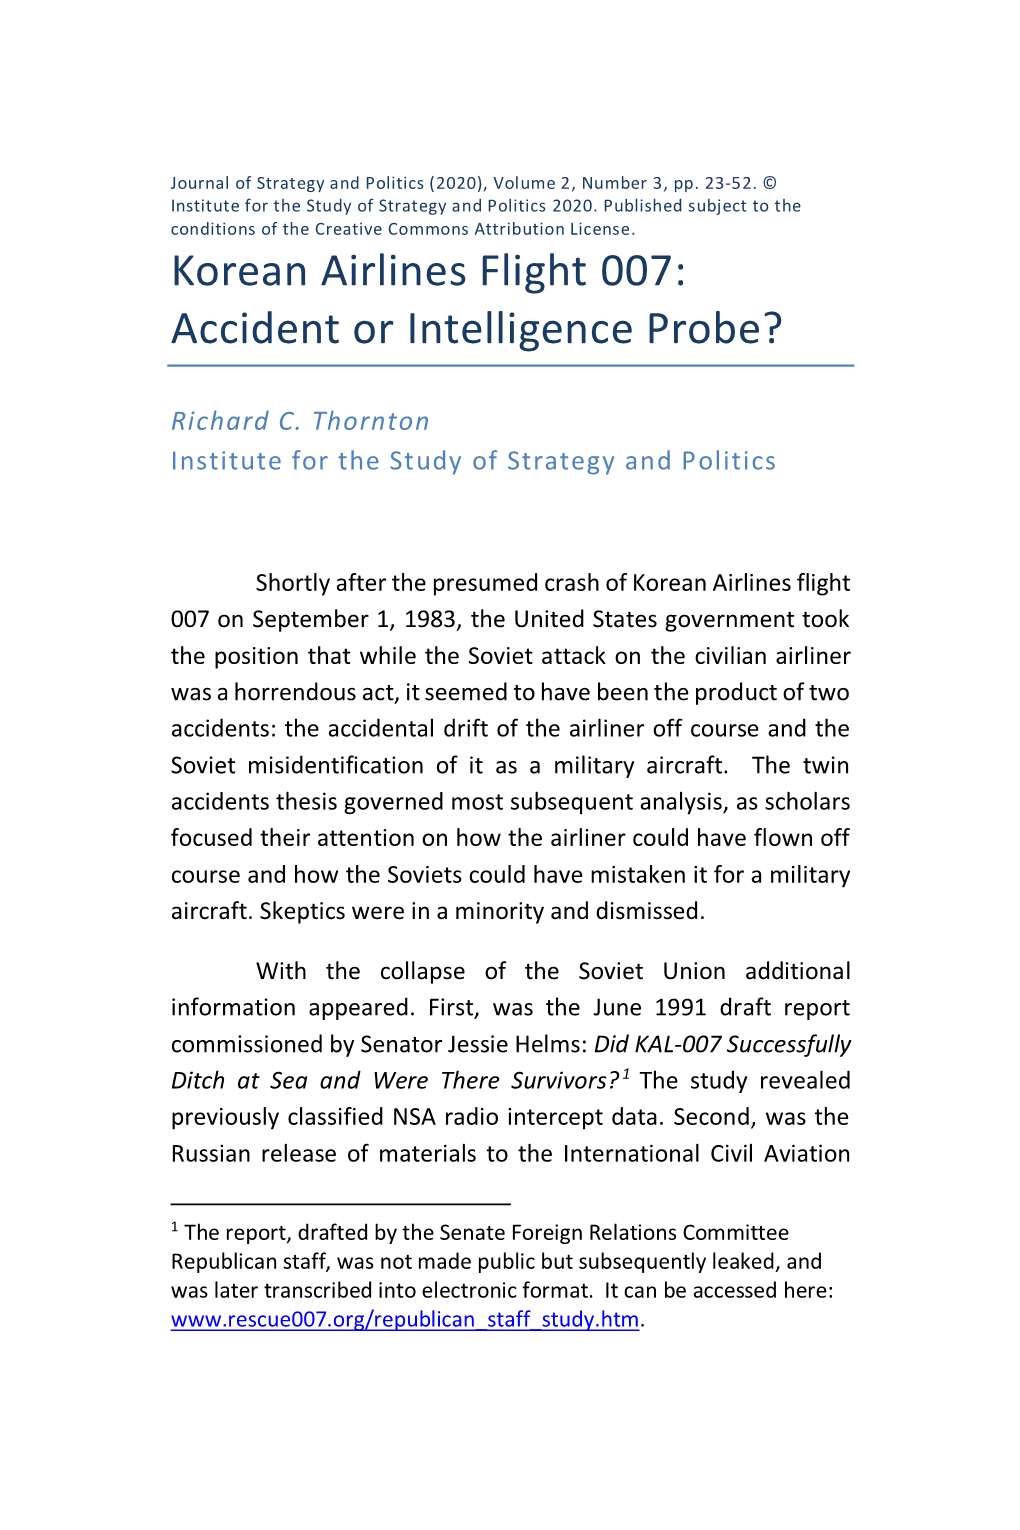 Korean Airlines Flight 007: Accident Or Intelligence Probe?